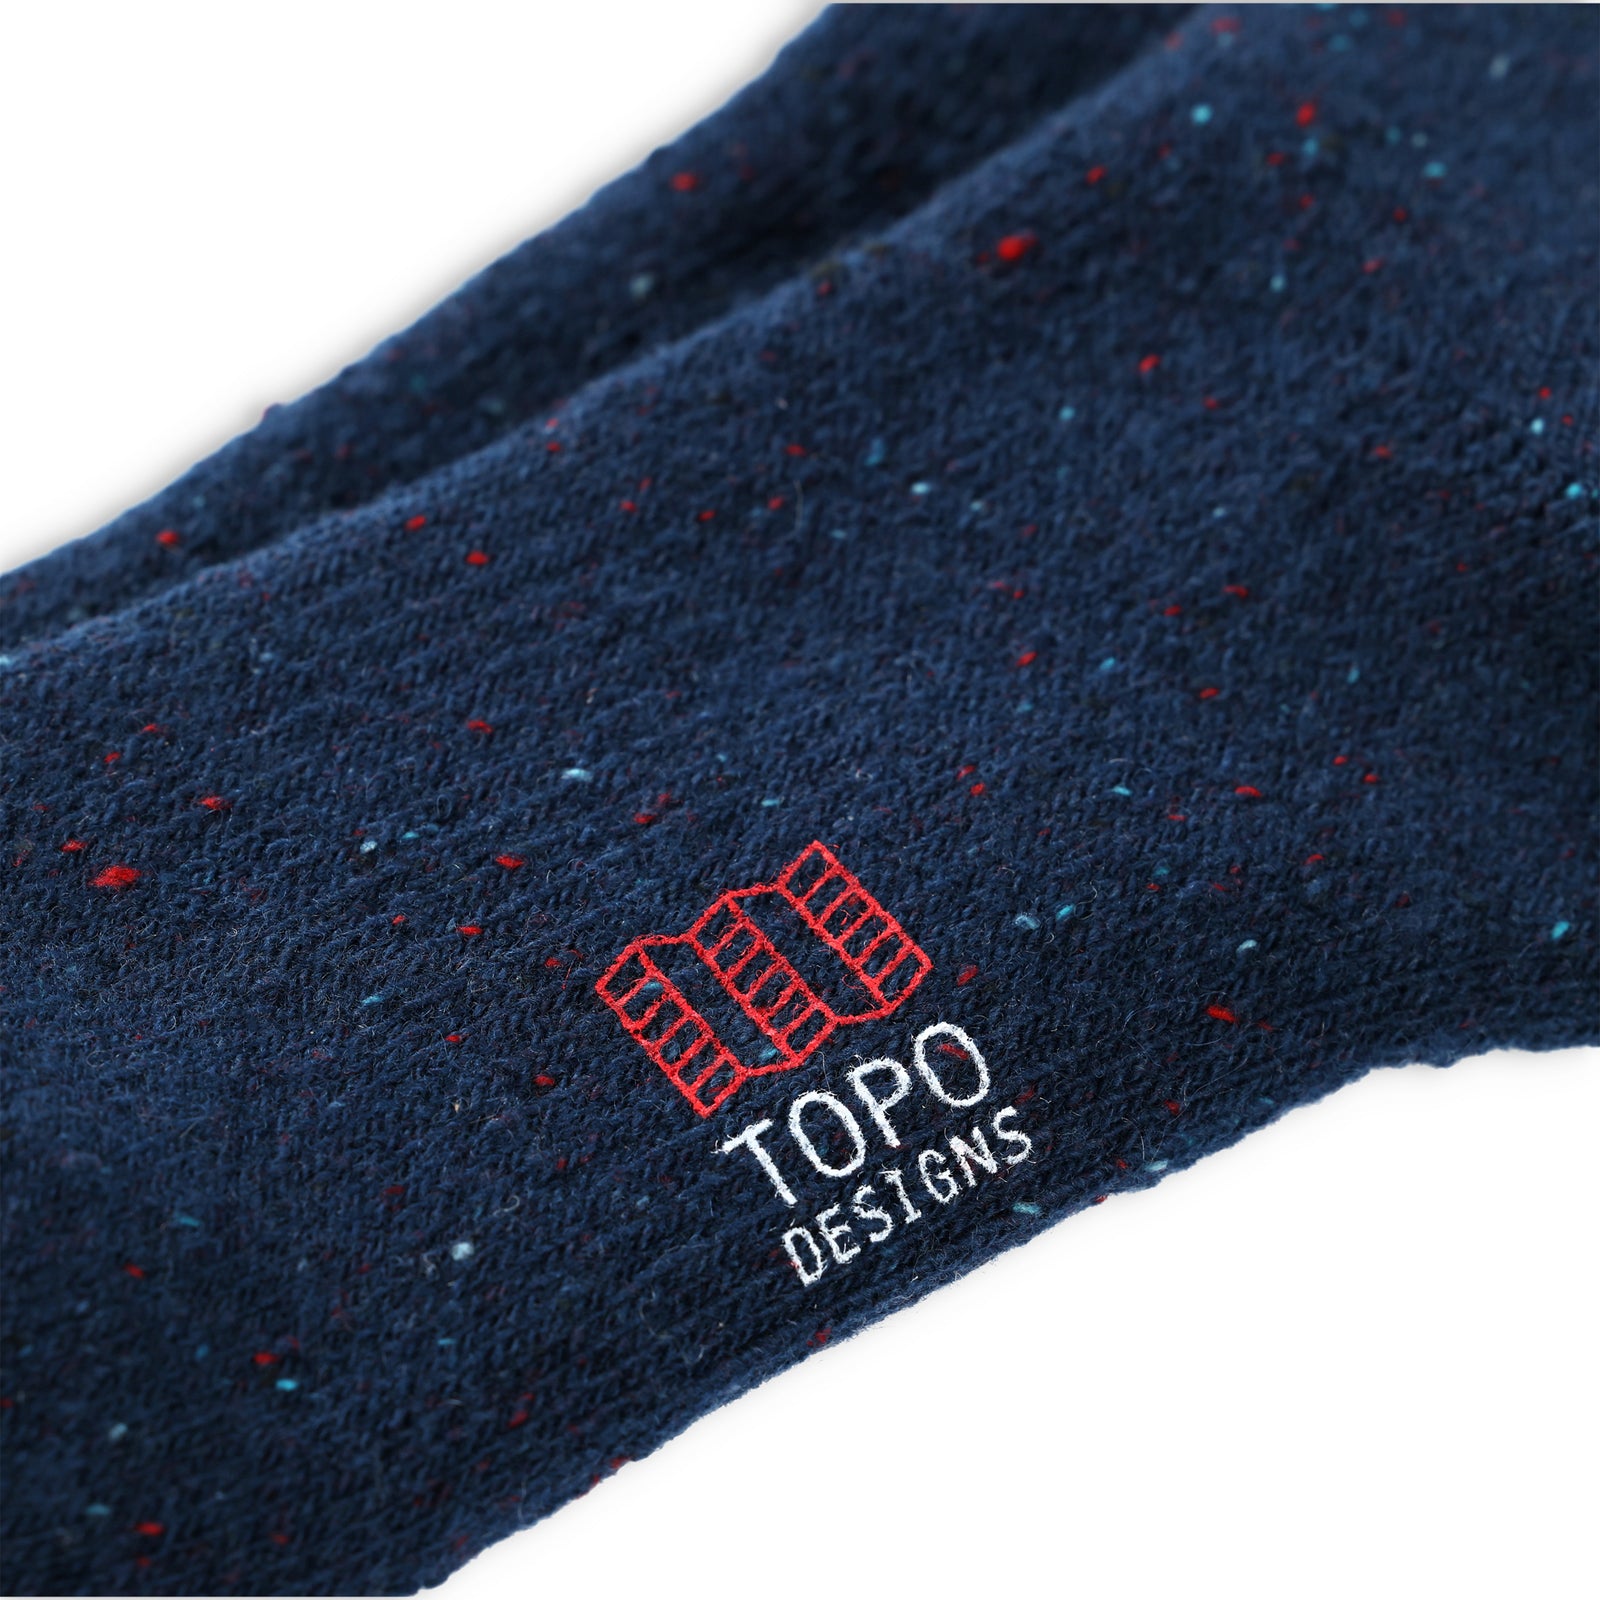 General detail shot of logo on Topo Designs Mountain heavyweight wool blend hiking Socks in "Pond Blue"